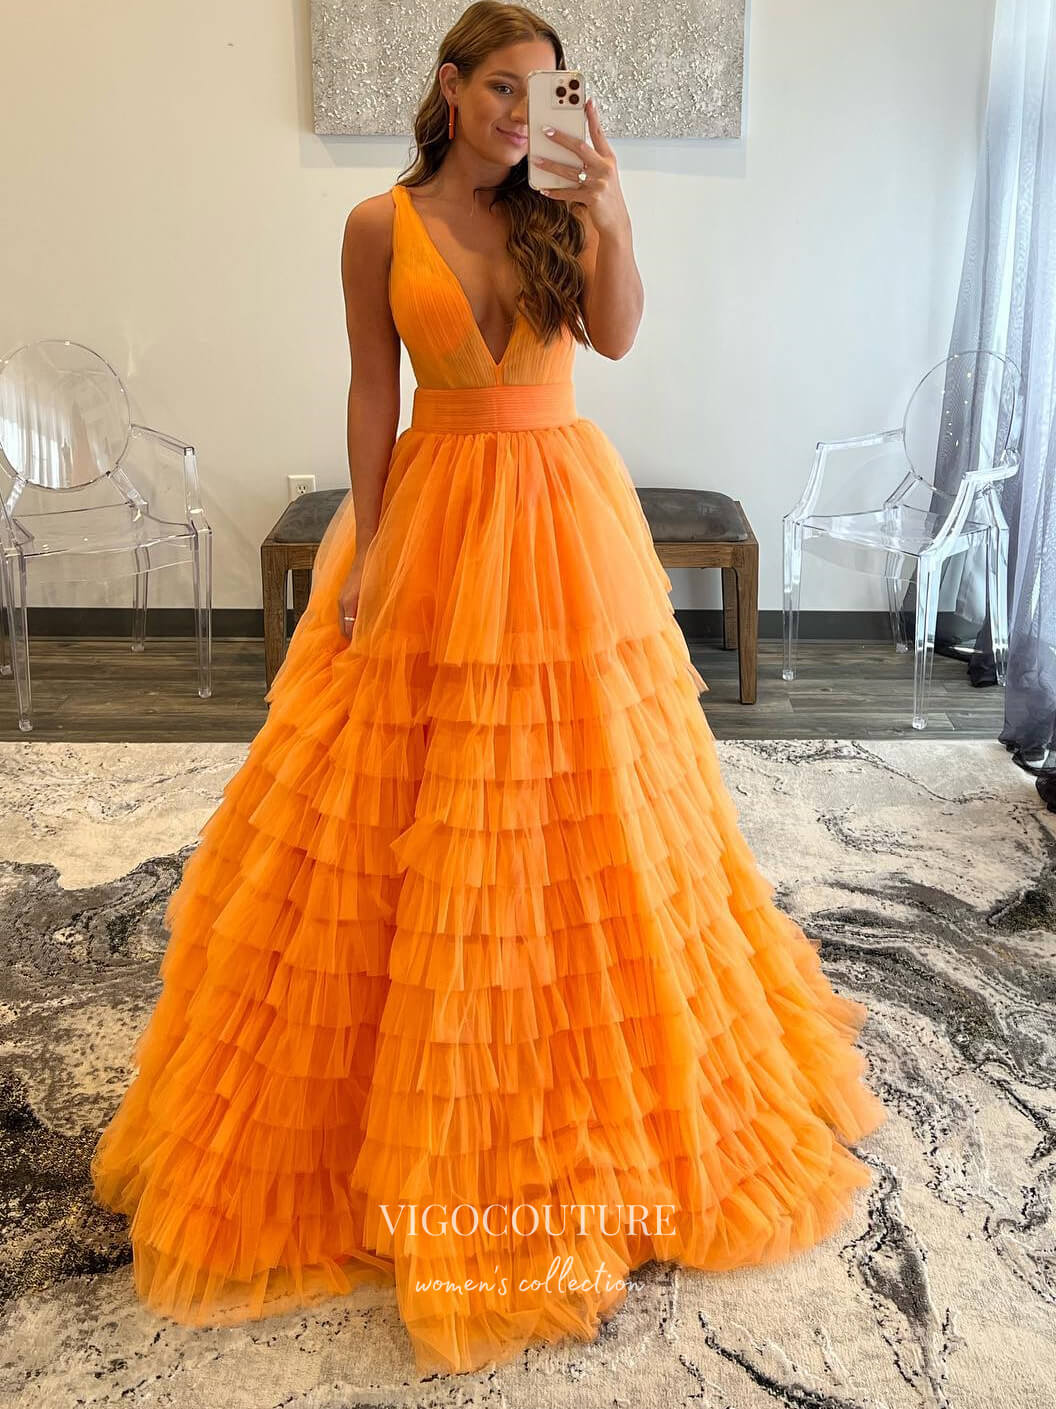 vigocouture-Tulle Tiered Prom Dresses A-Line Plunging V-Neck Formal Dresses 21553-Prom Dresses-vigocouture-Orange-US2-